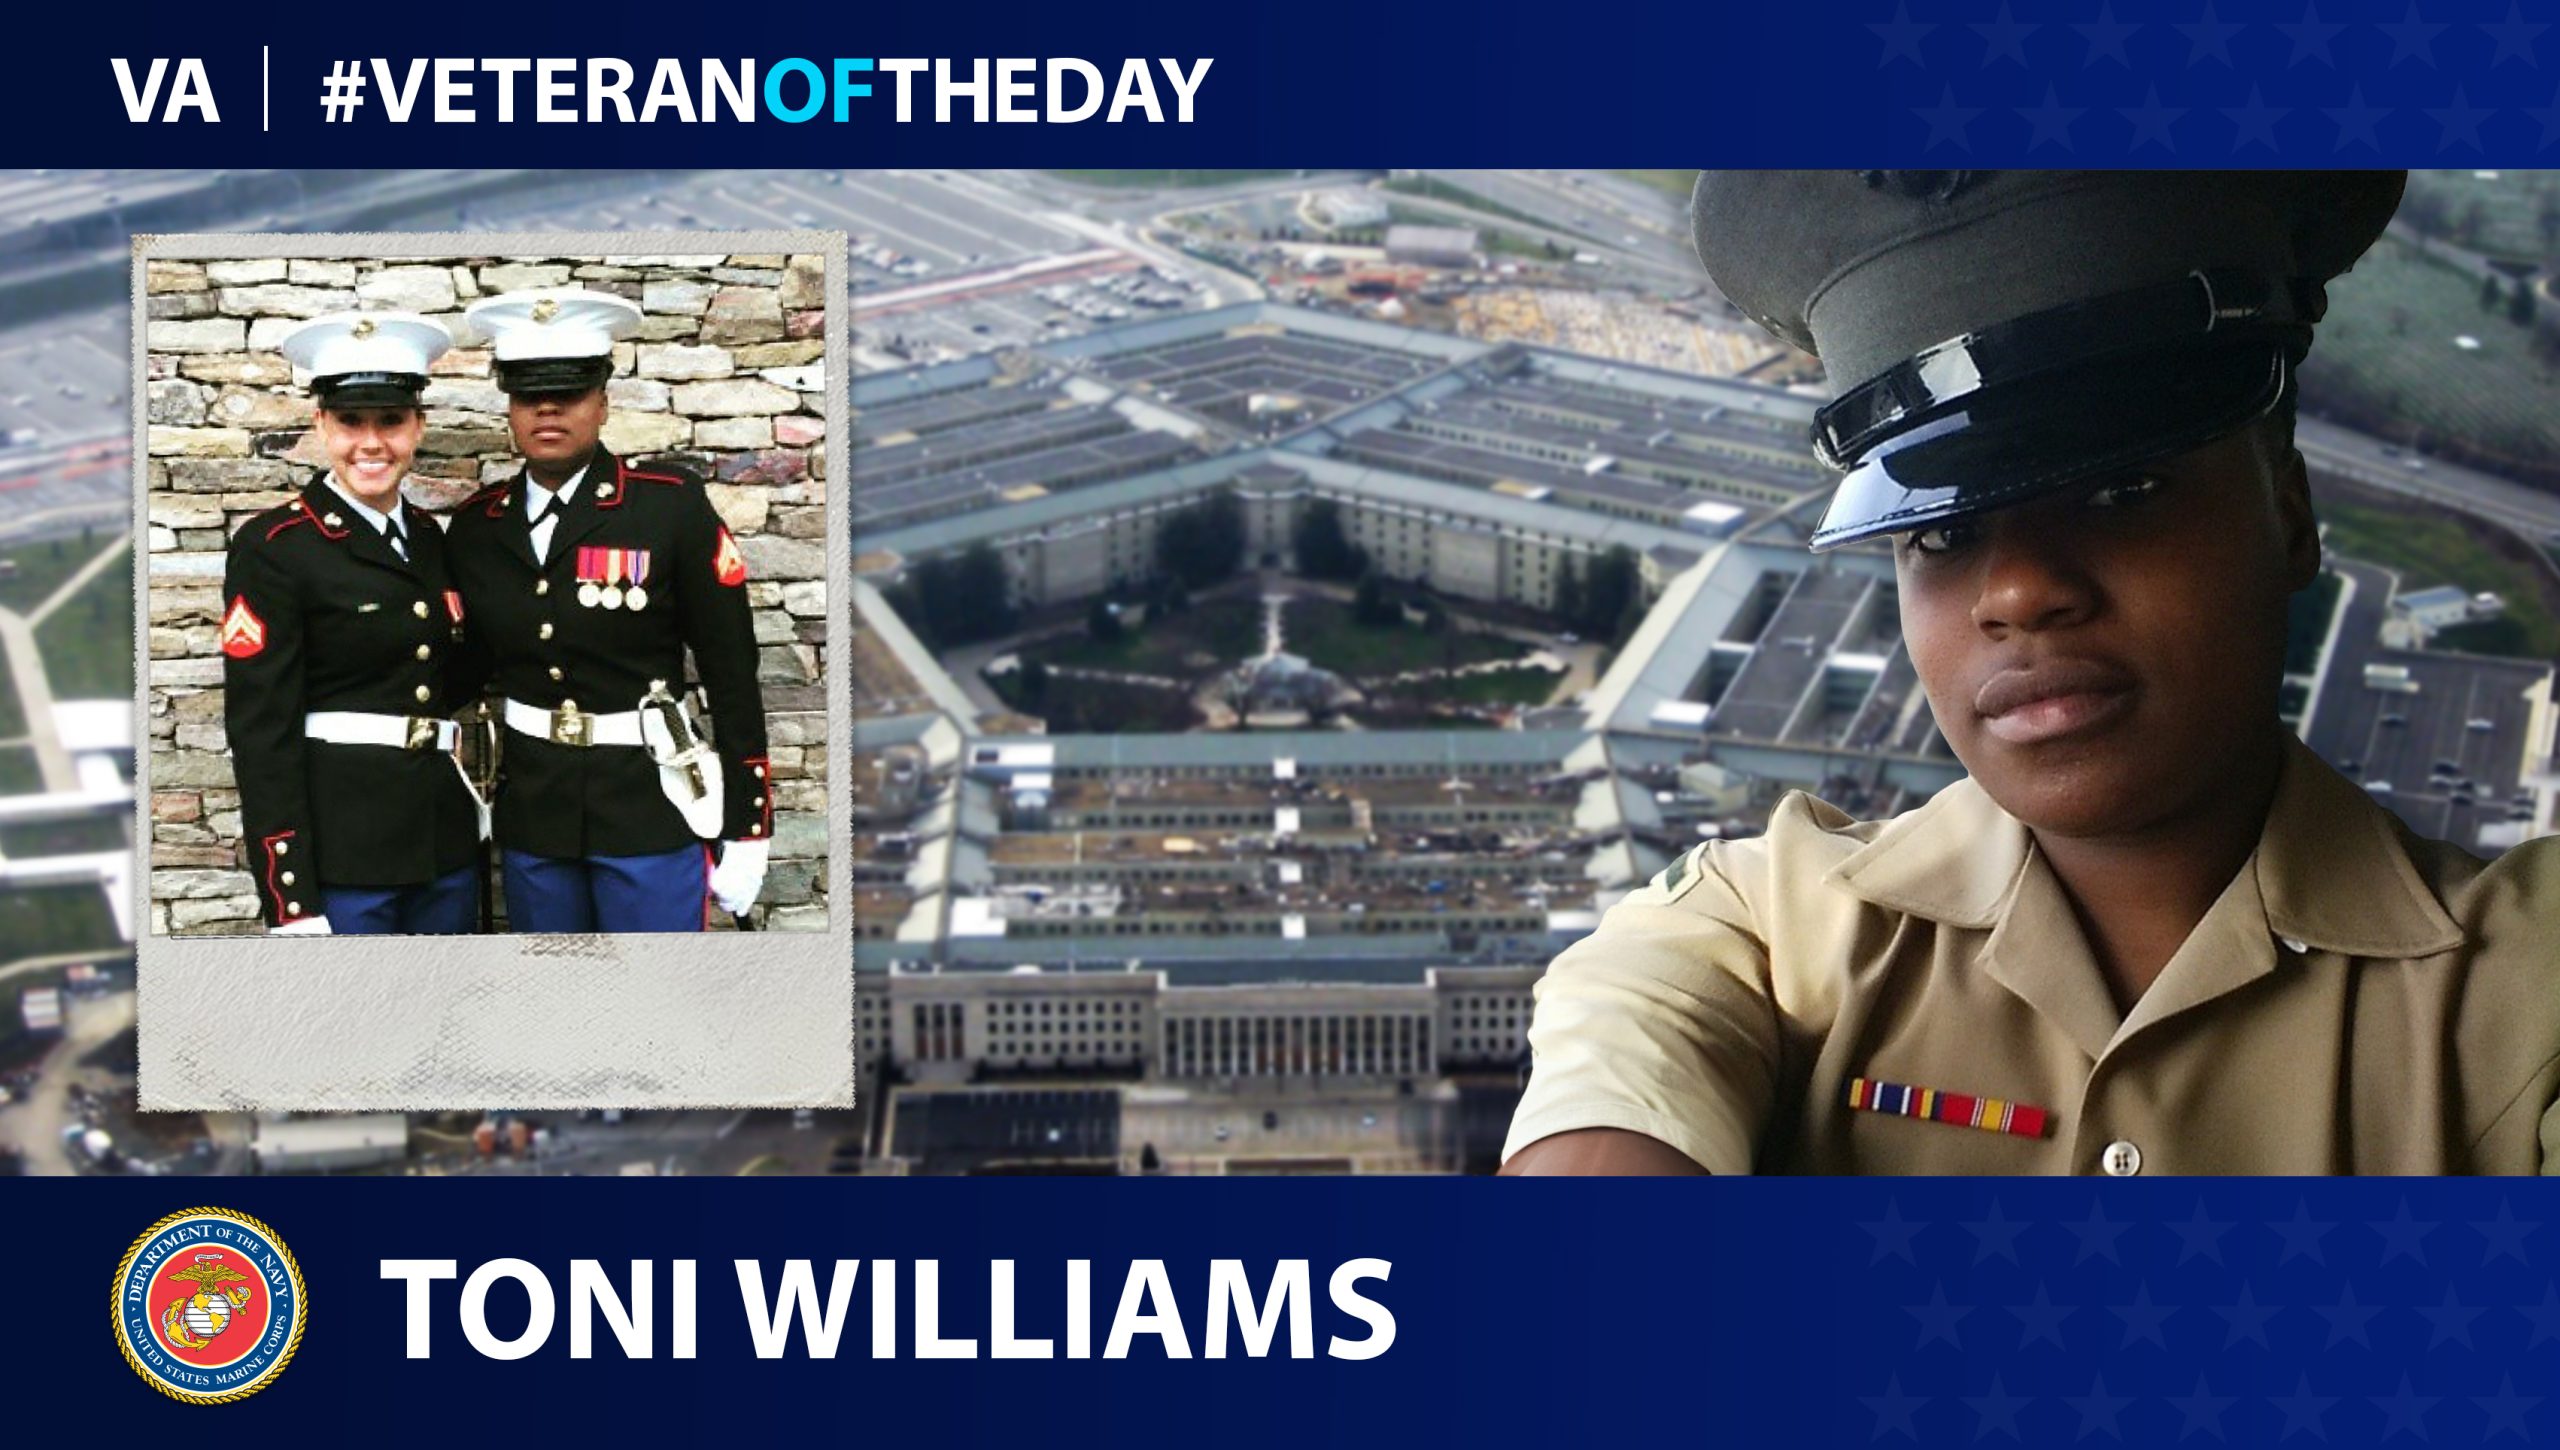 Marine Corps Veteran Toni Williams is today's Veteran of the Day.